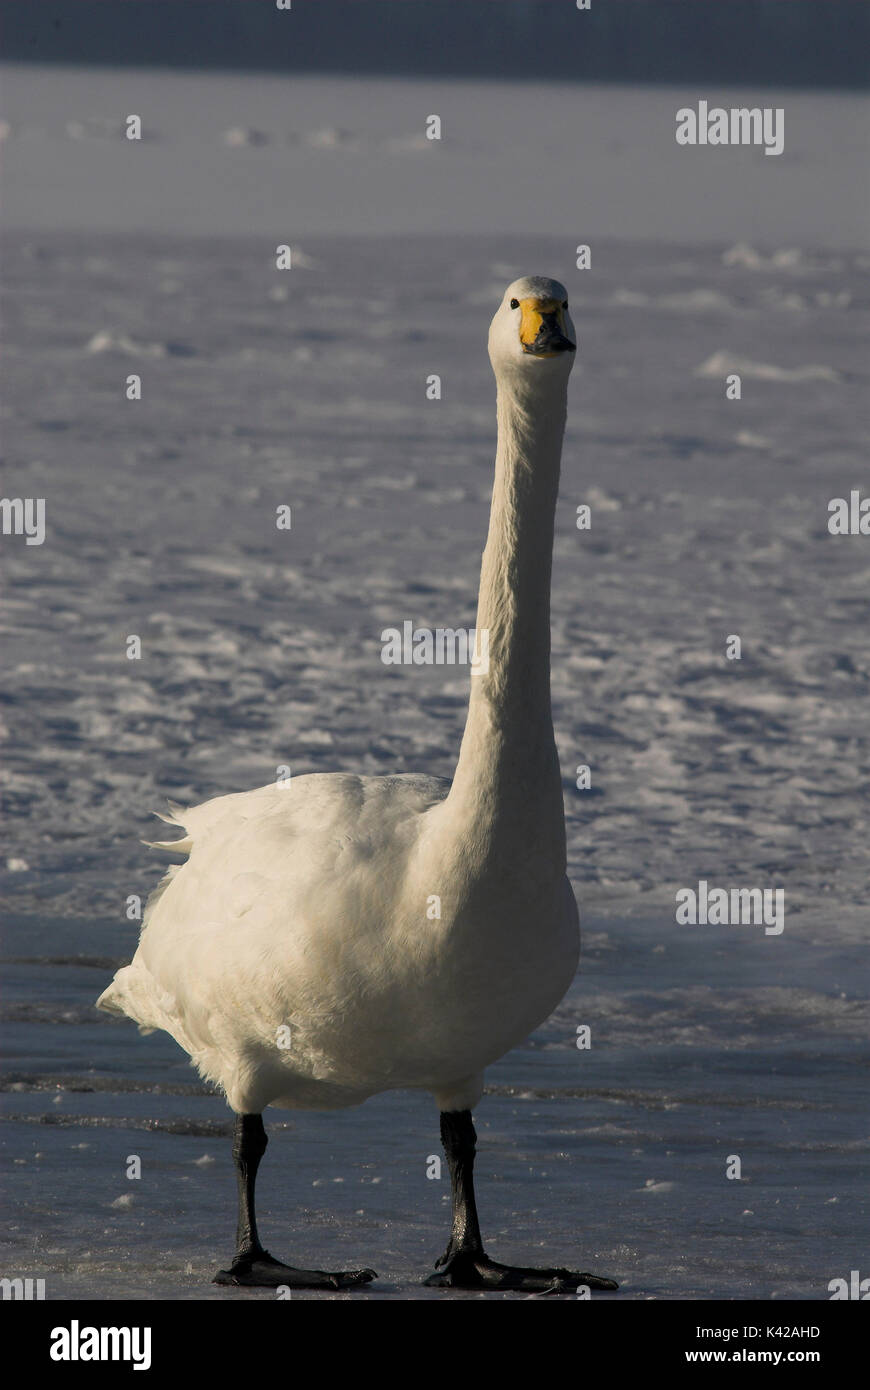 Whooper swan, Cygnus cygnus, standing on ice, lake Kussharo-ko, Hokkaido Island, Japan, japanese, Asian, wilderness, wild, untamed, ornithology, snow, Stock Photo